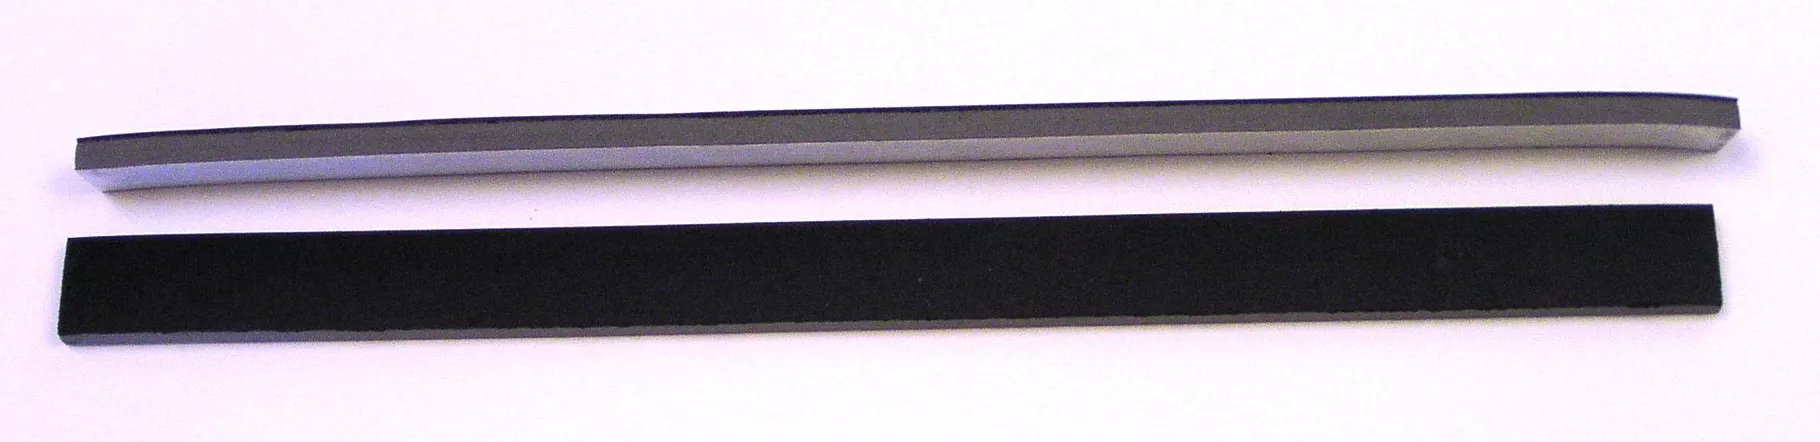 3M™ File Belt Sander Platen Pad Material 28377, 1/2 in x 7 in x 1/8 in
Soft, 10 ea/Case